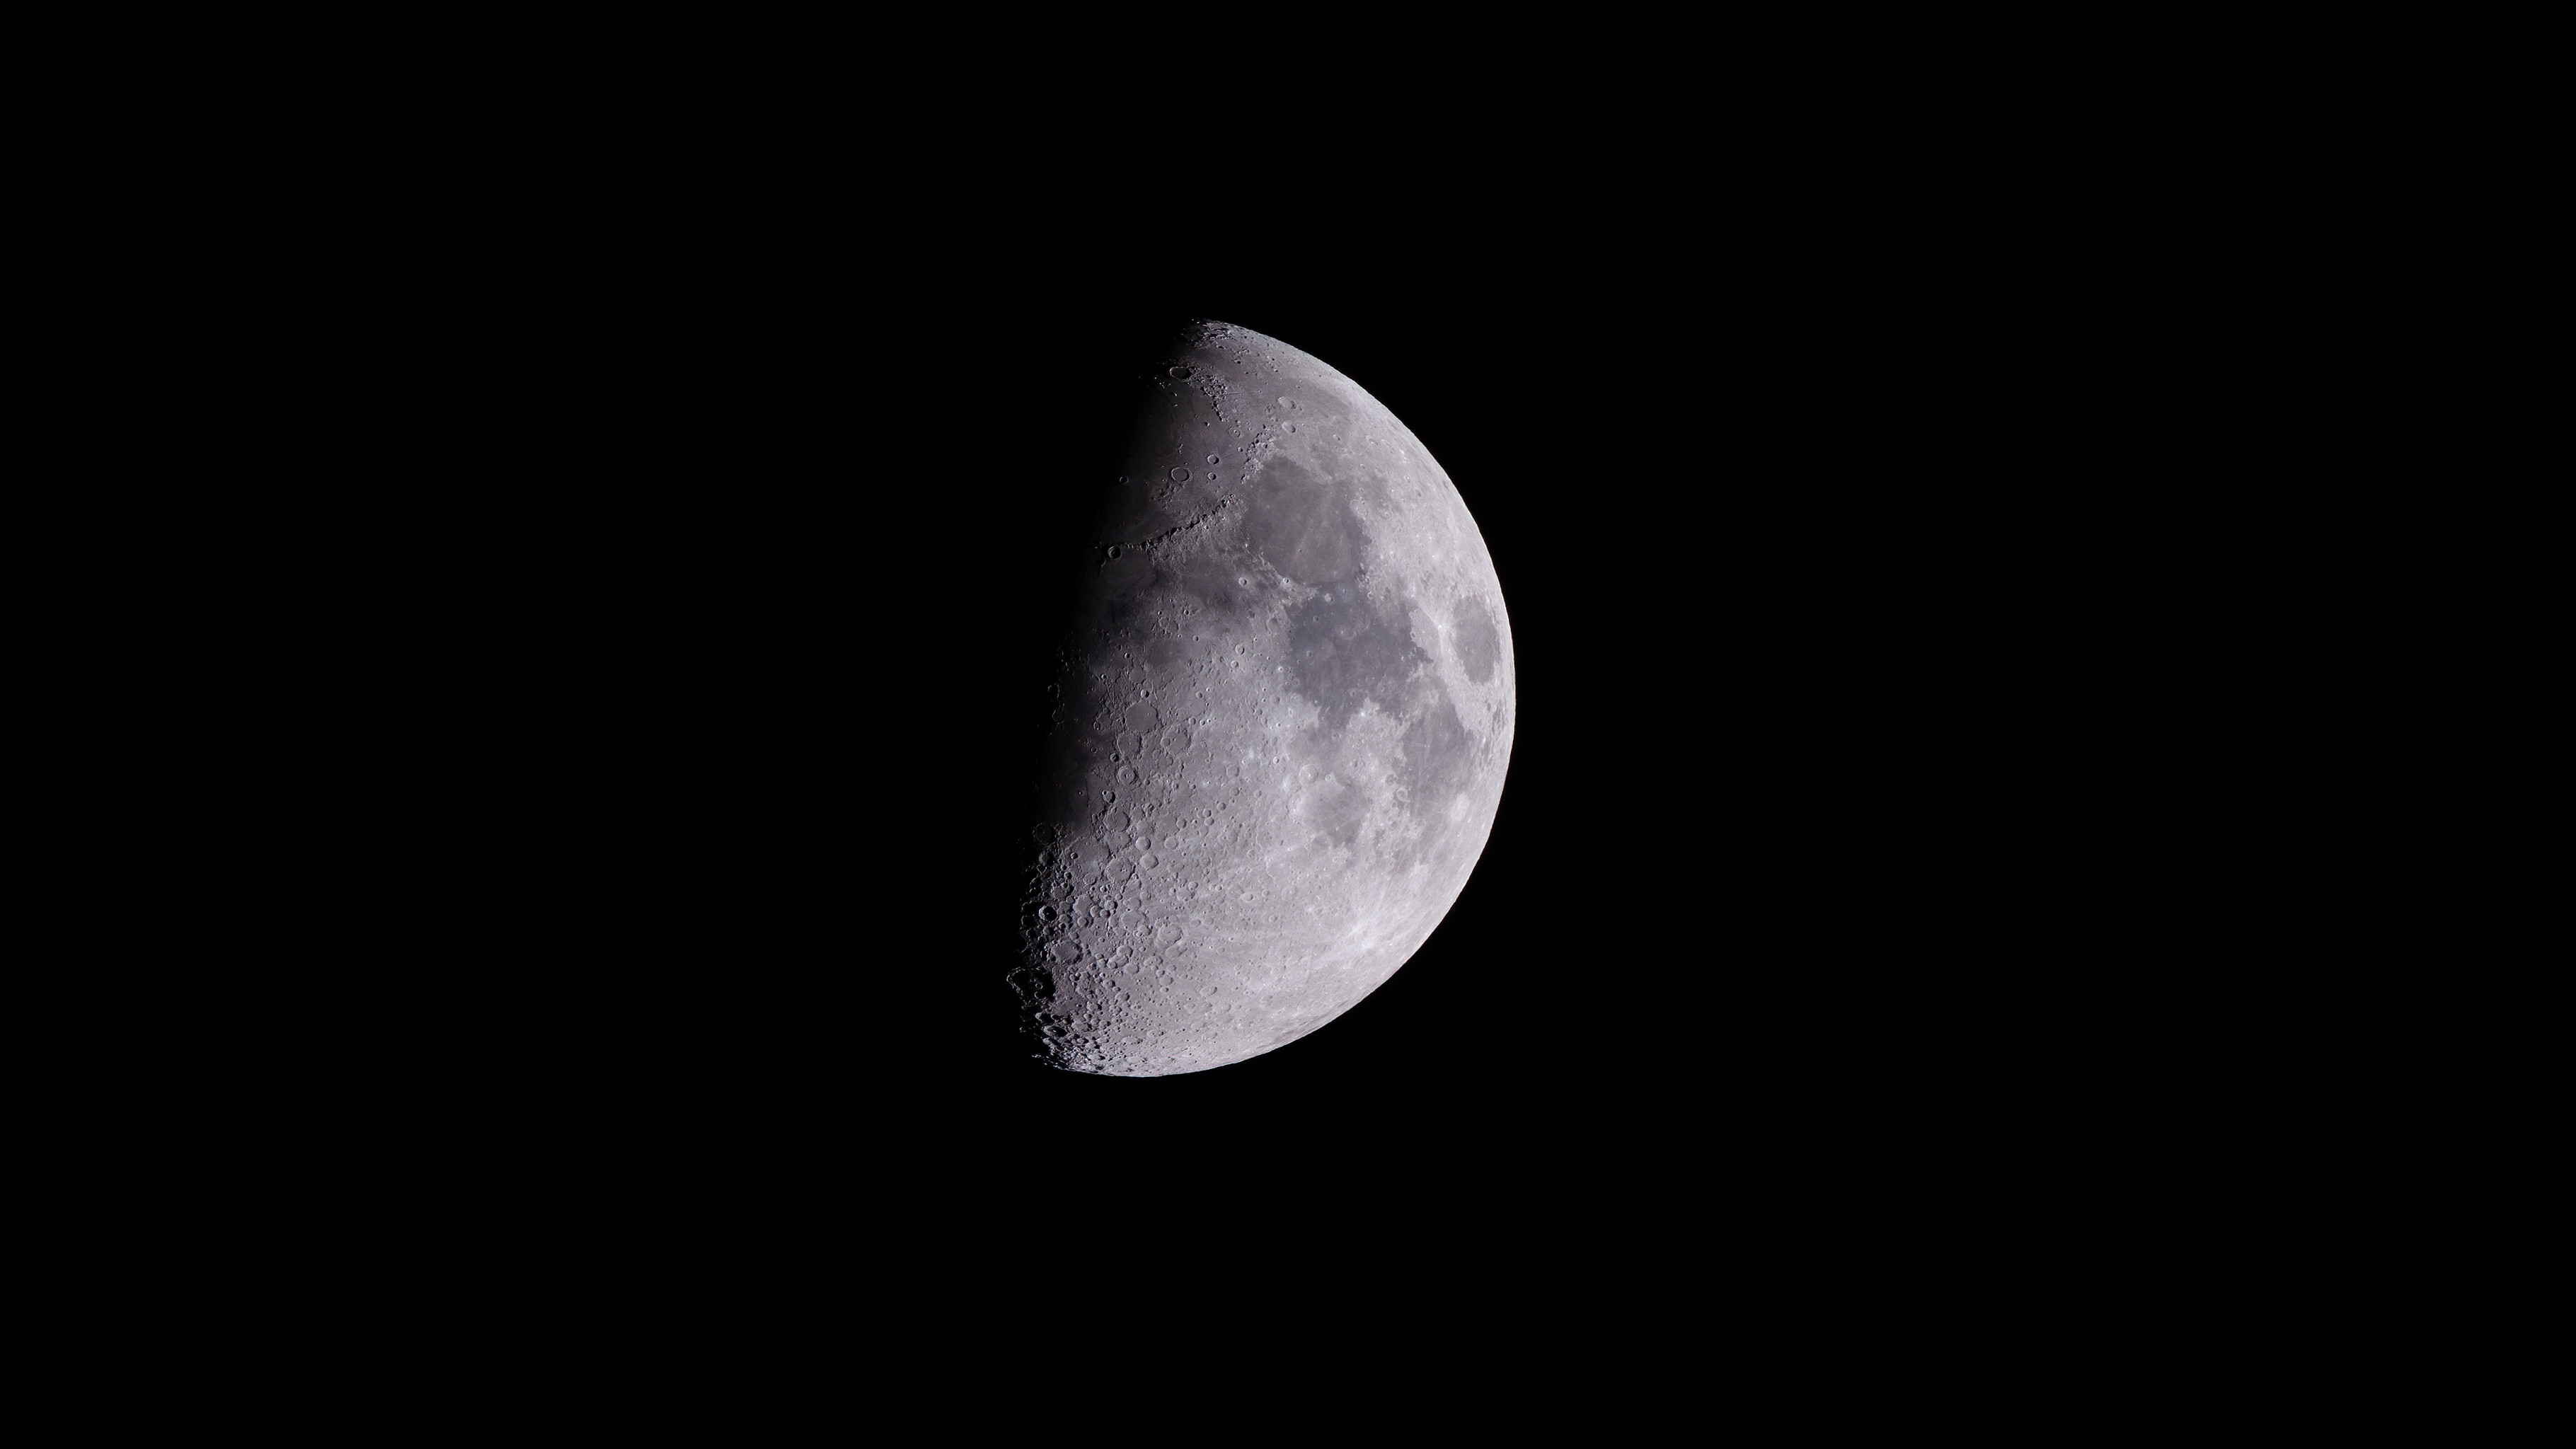 dark, shadow, moon, night, craters Free Stock Photo